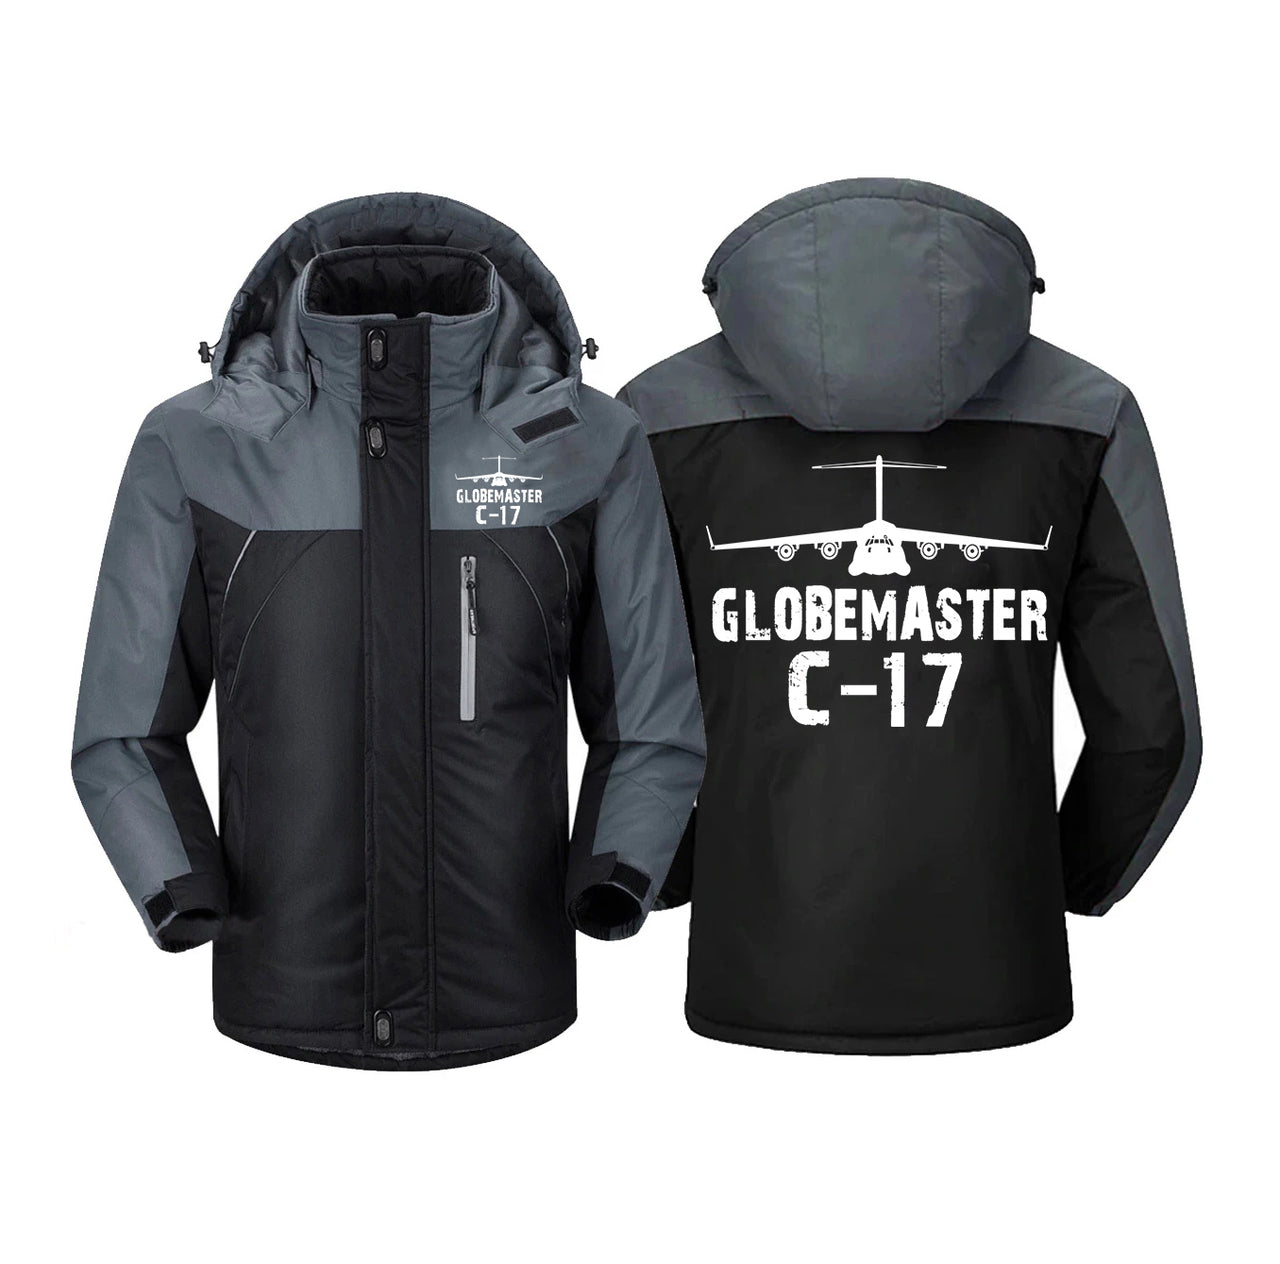 GlobeMaster C-17 & Plane Designed Thick Winter Jackets